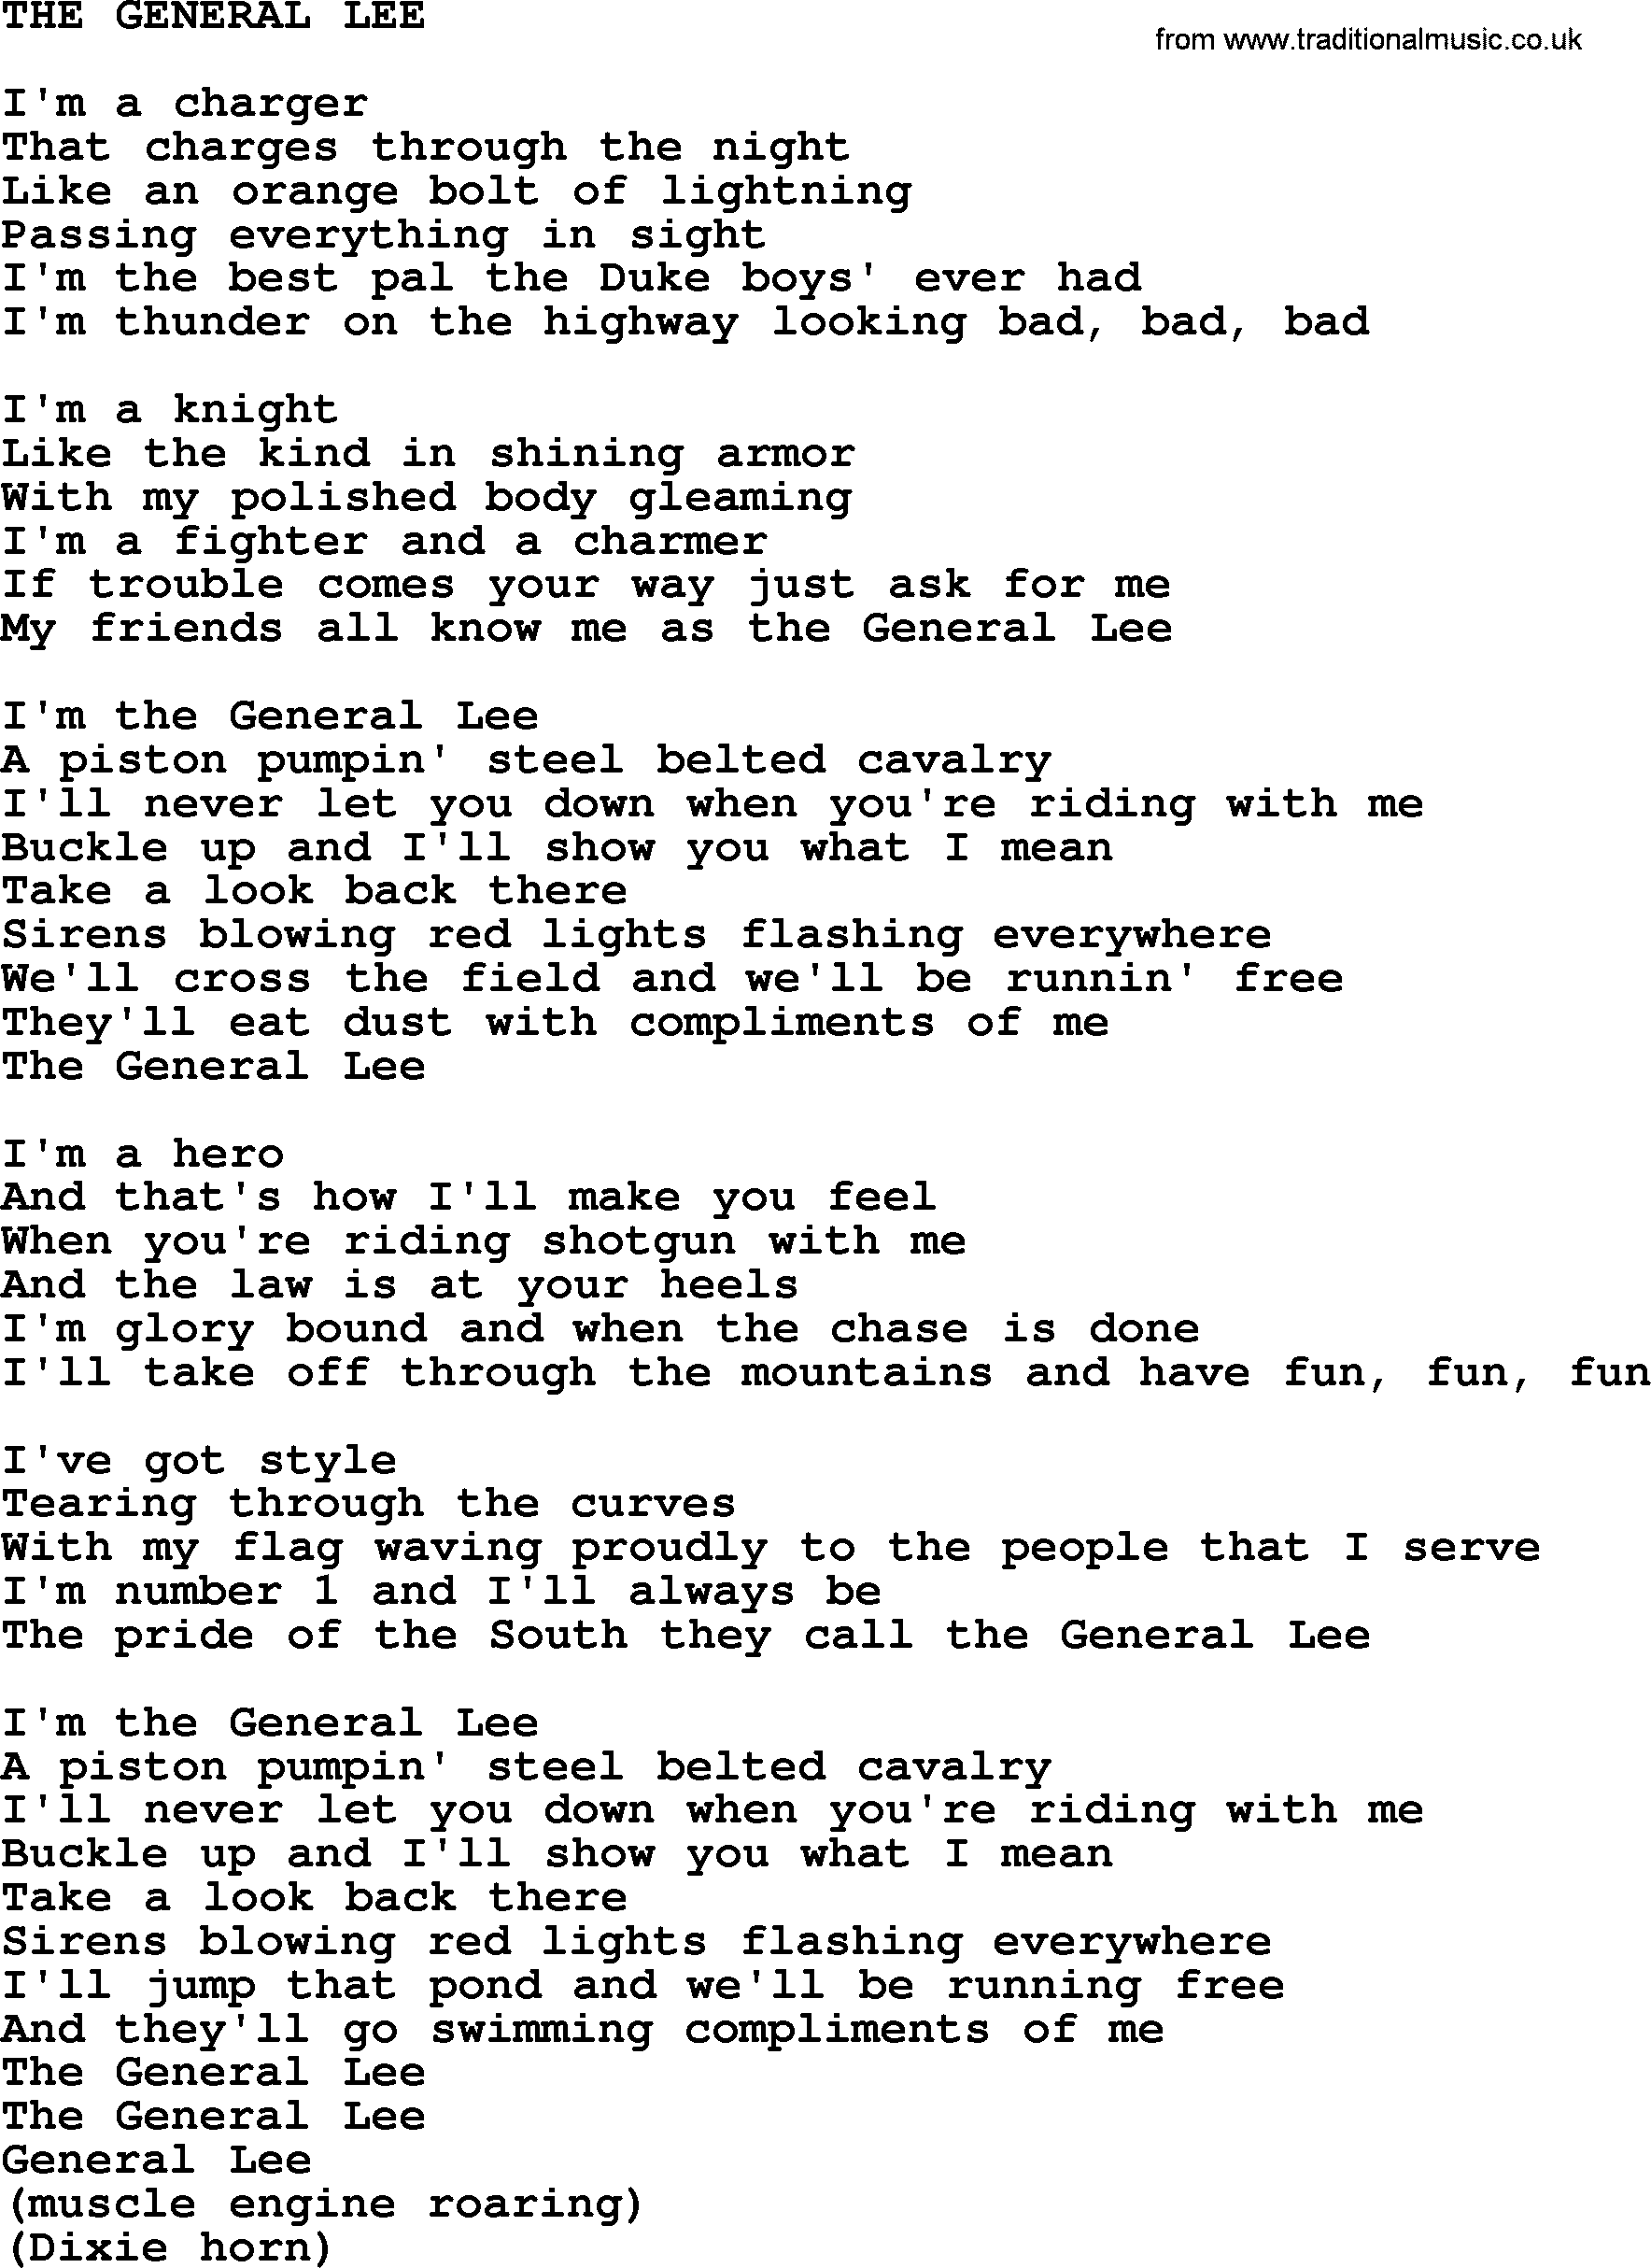 Johnny Cash song The General Lee.txt lyrics